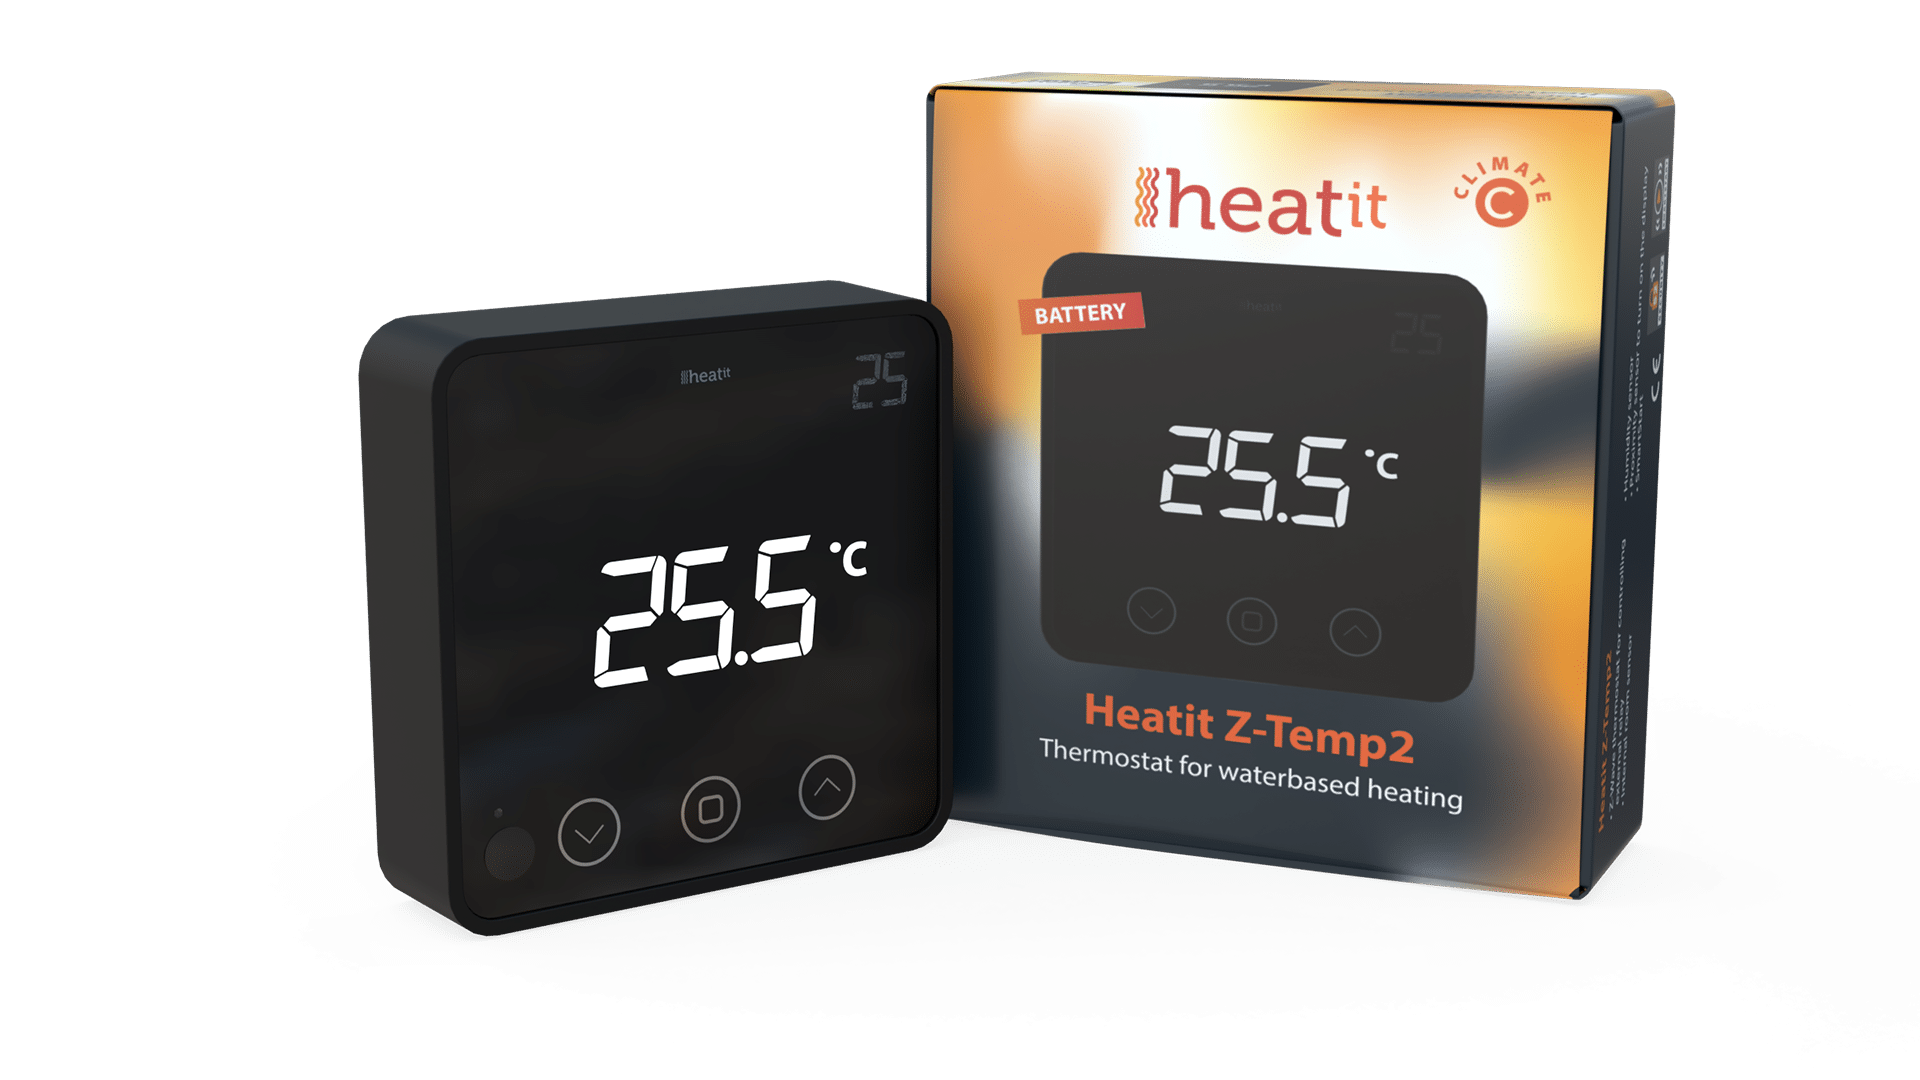 Heatit Z-Temp 2